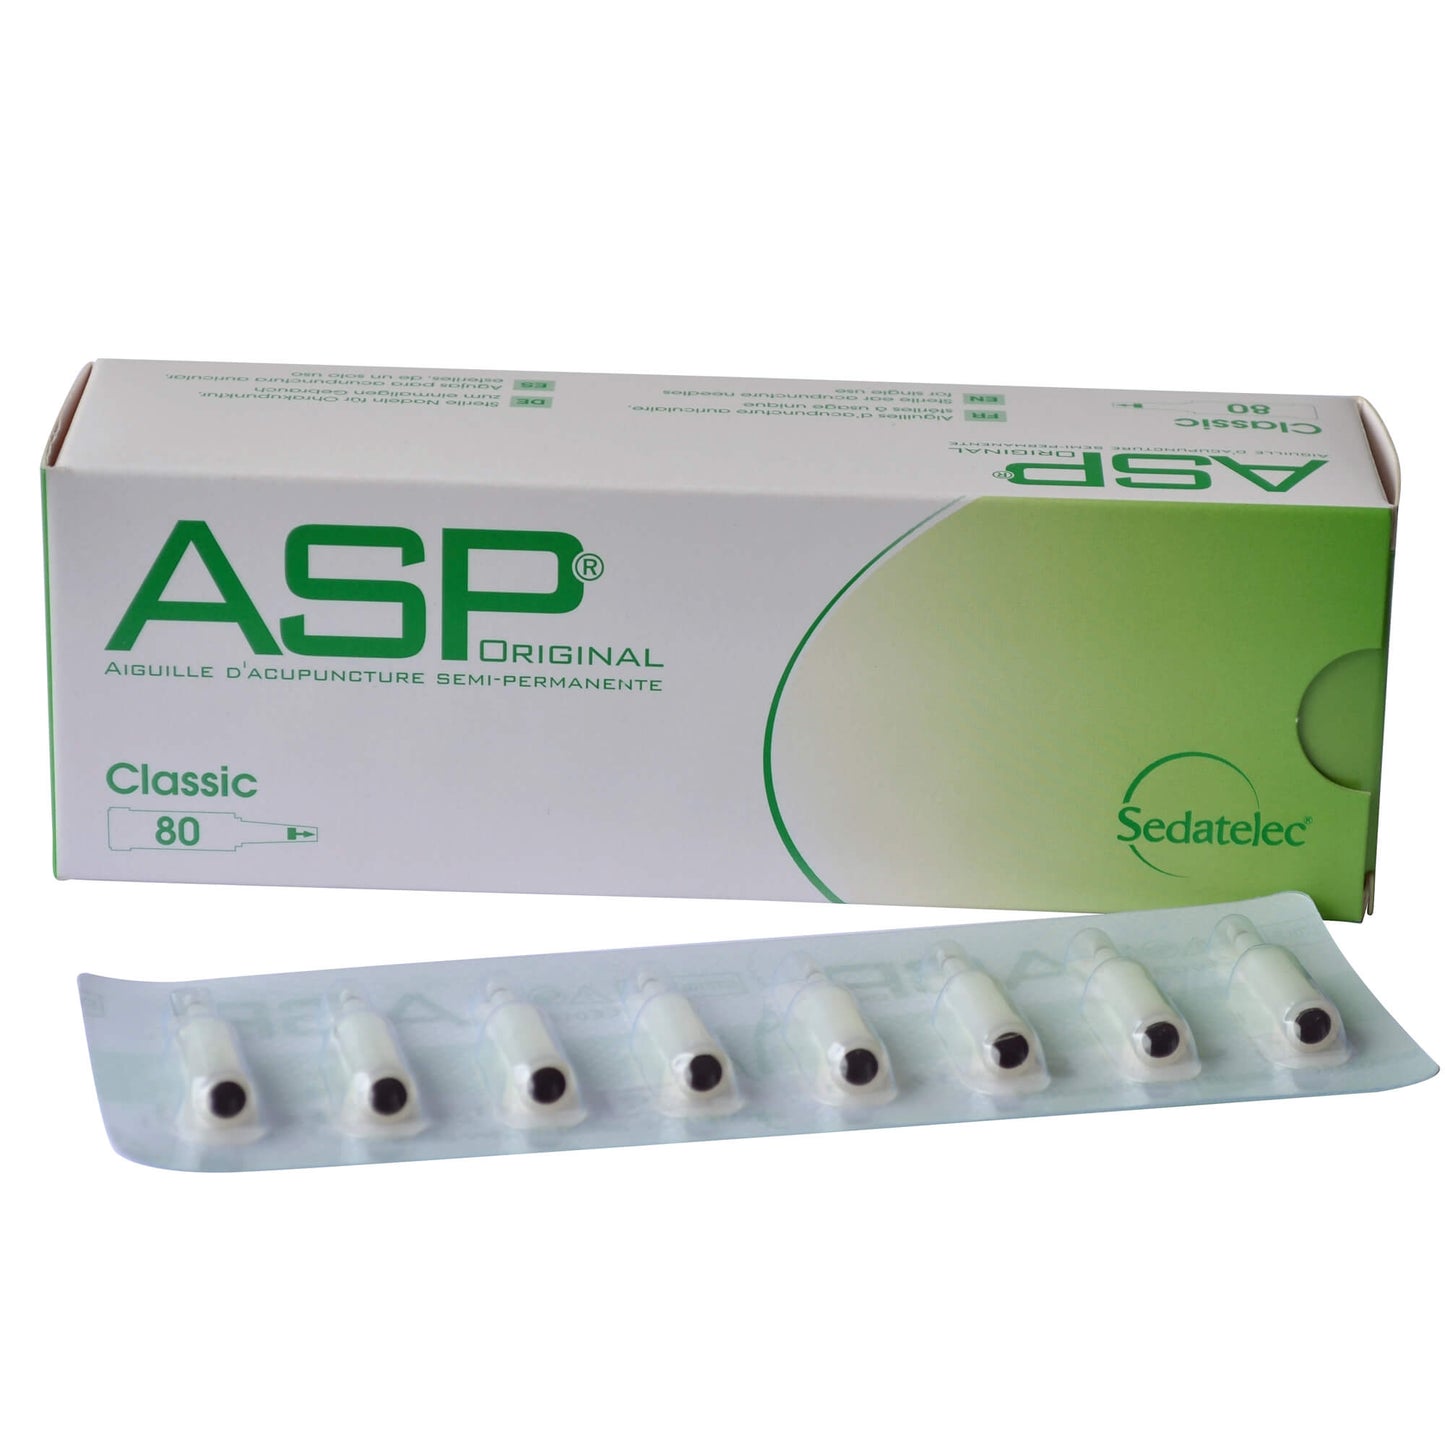 ASP Classic 80 needles